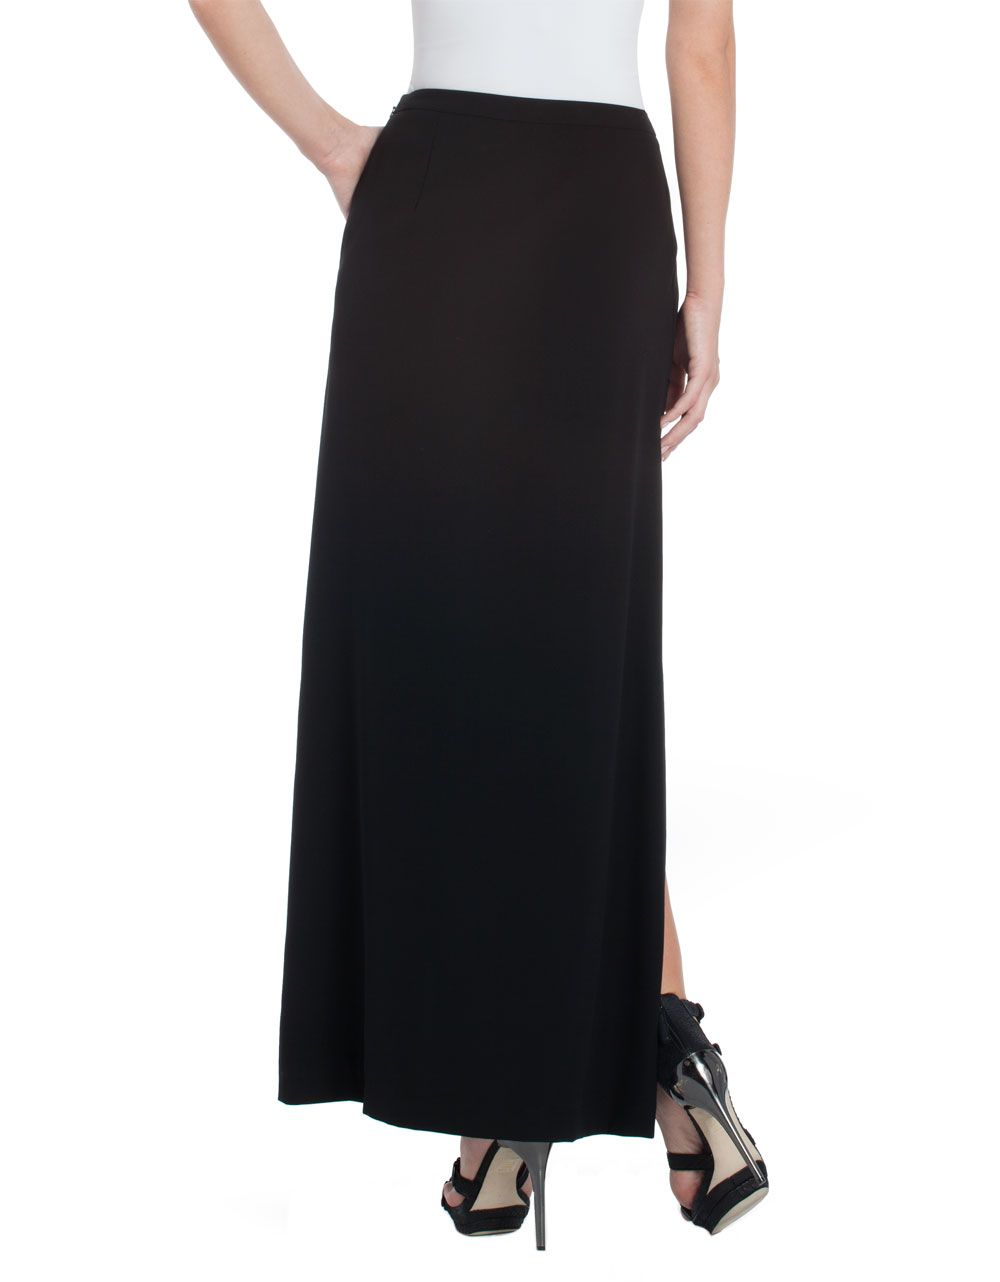 BCBGMAXAZRIA Double Slit Maxi Skirt in Black - Lyst